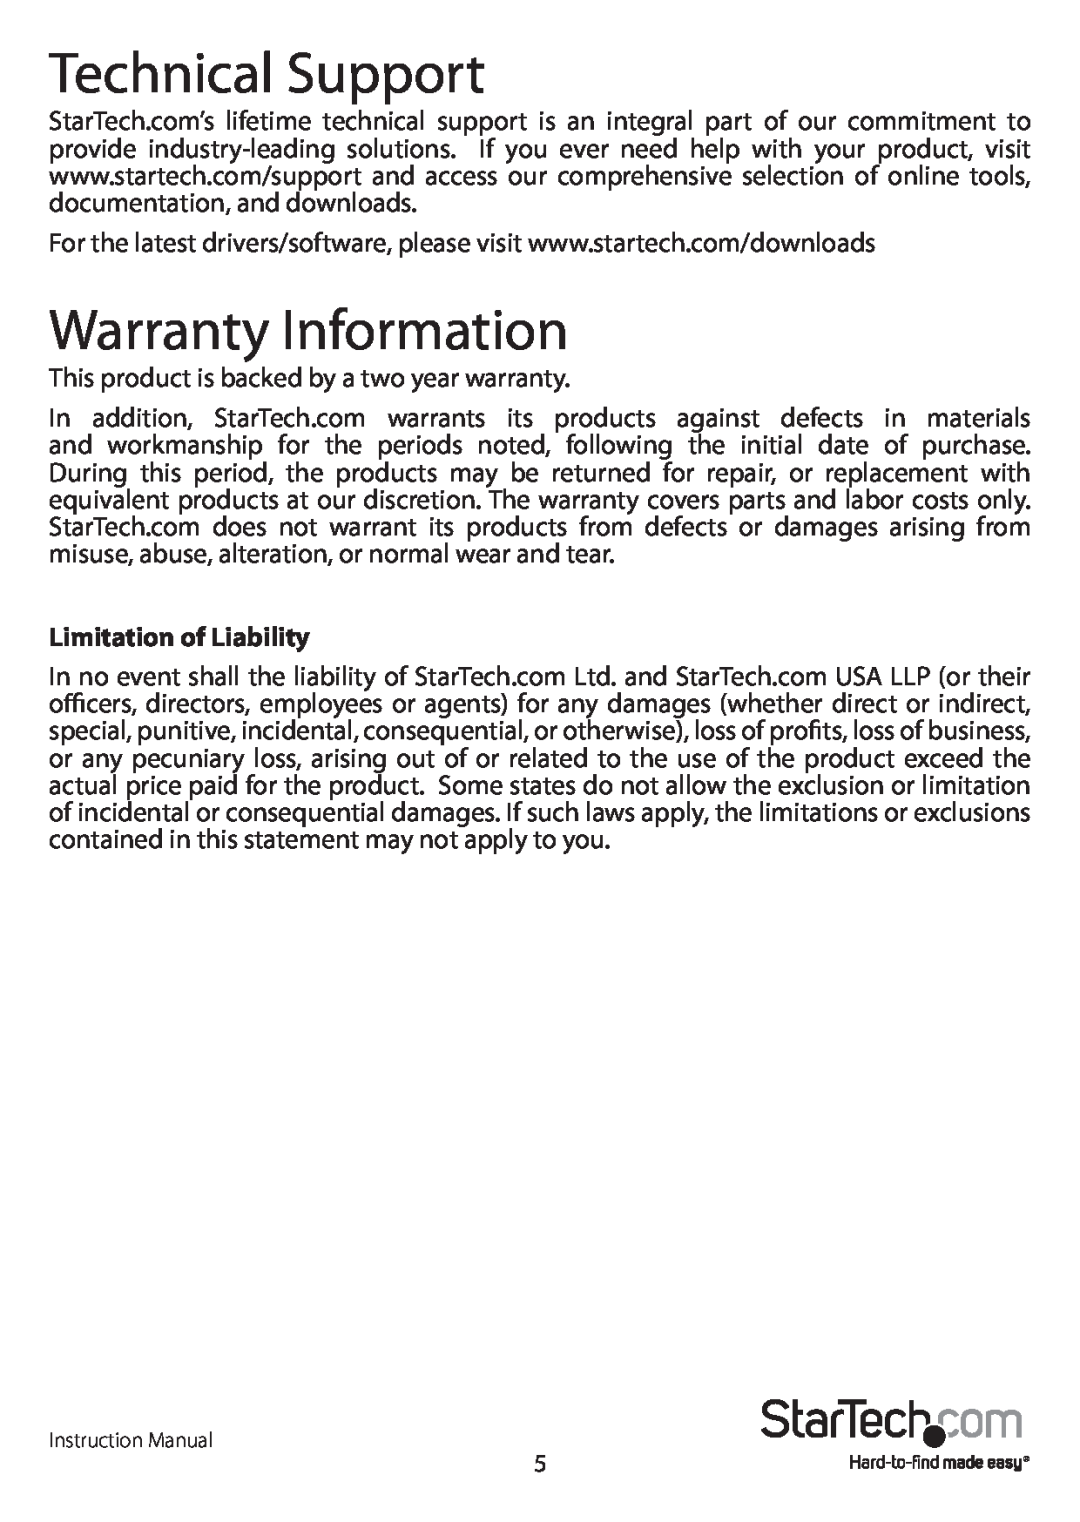 Star Tech Development ST1000SPEX4 manual Technical Support, Warranty Information, Limitation of Liability 